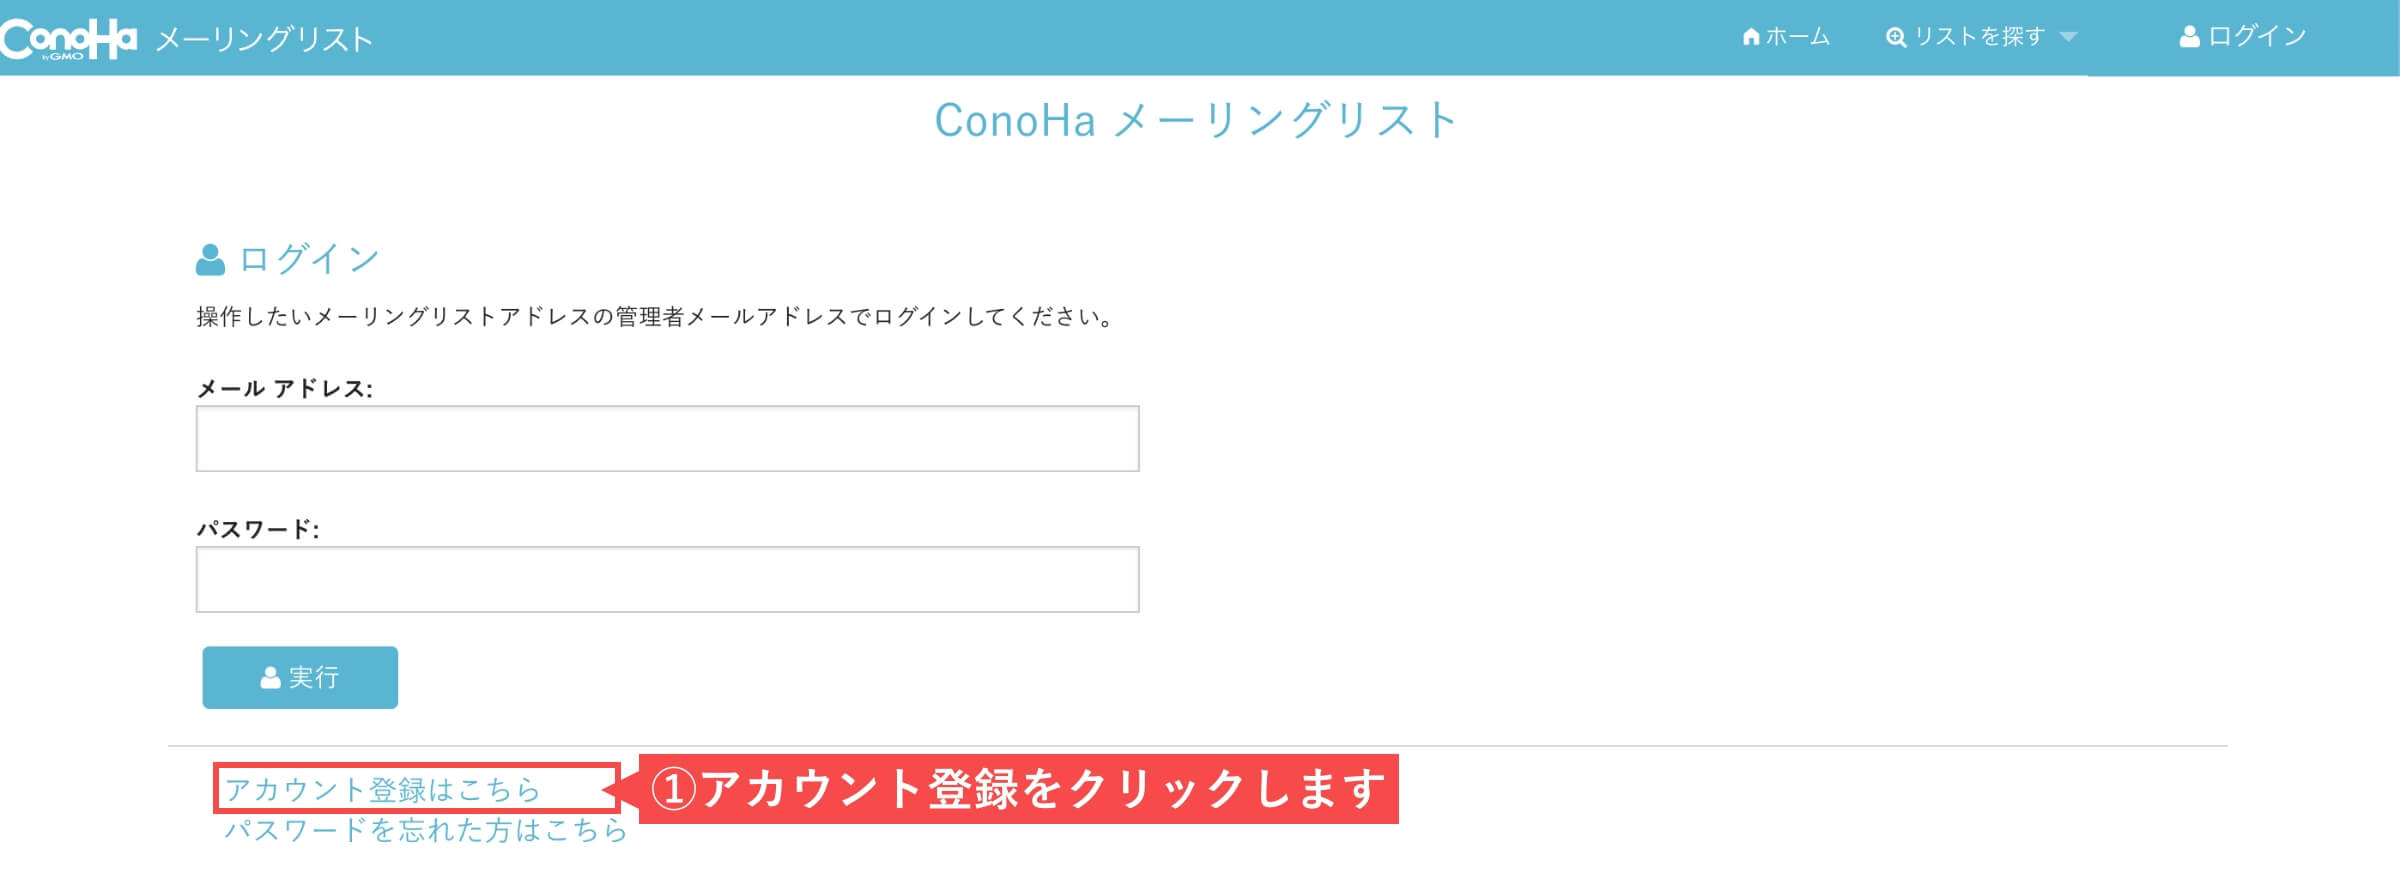 ConoHa WINGのメーリングリストのログイン画面